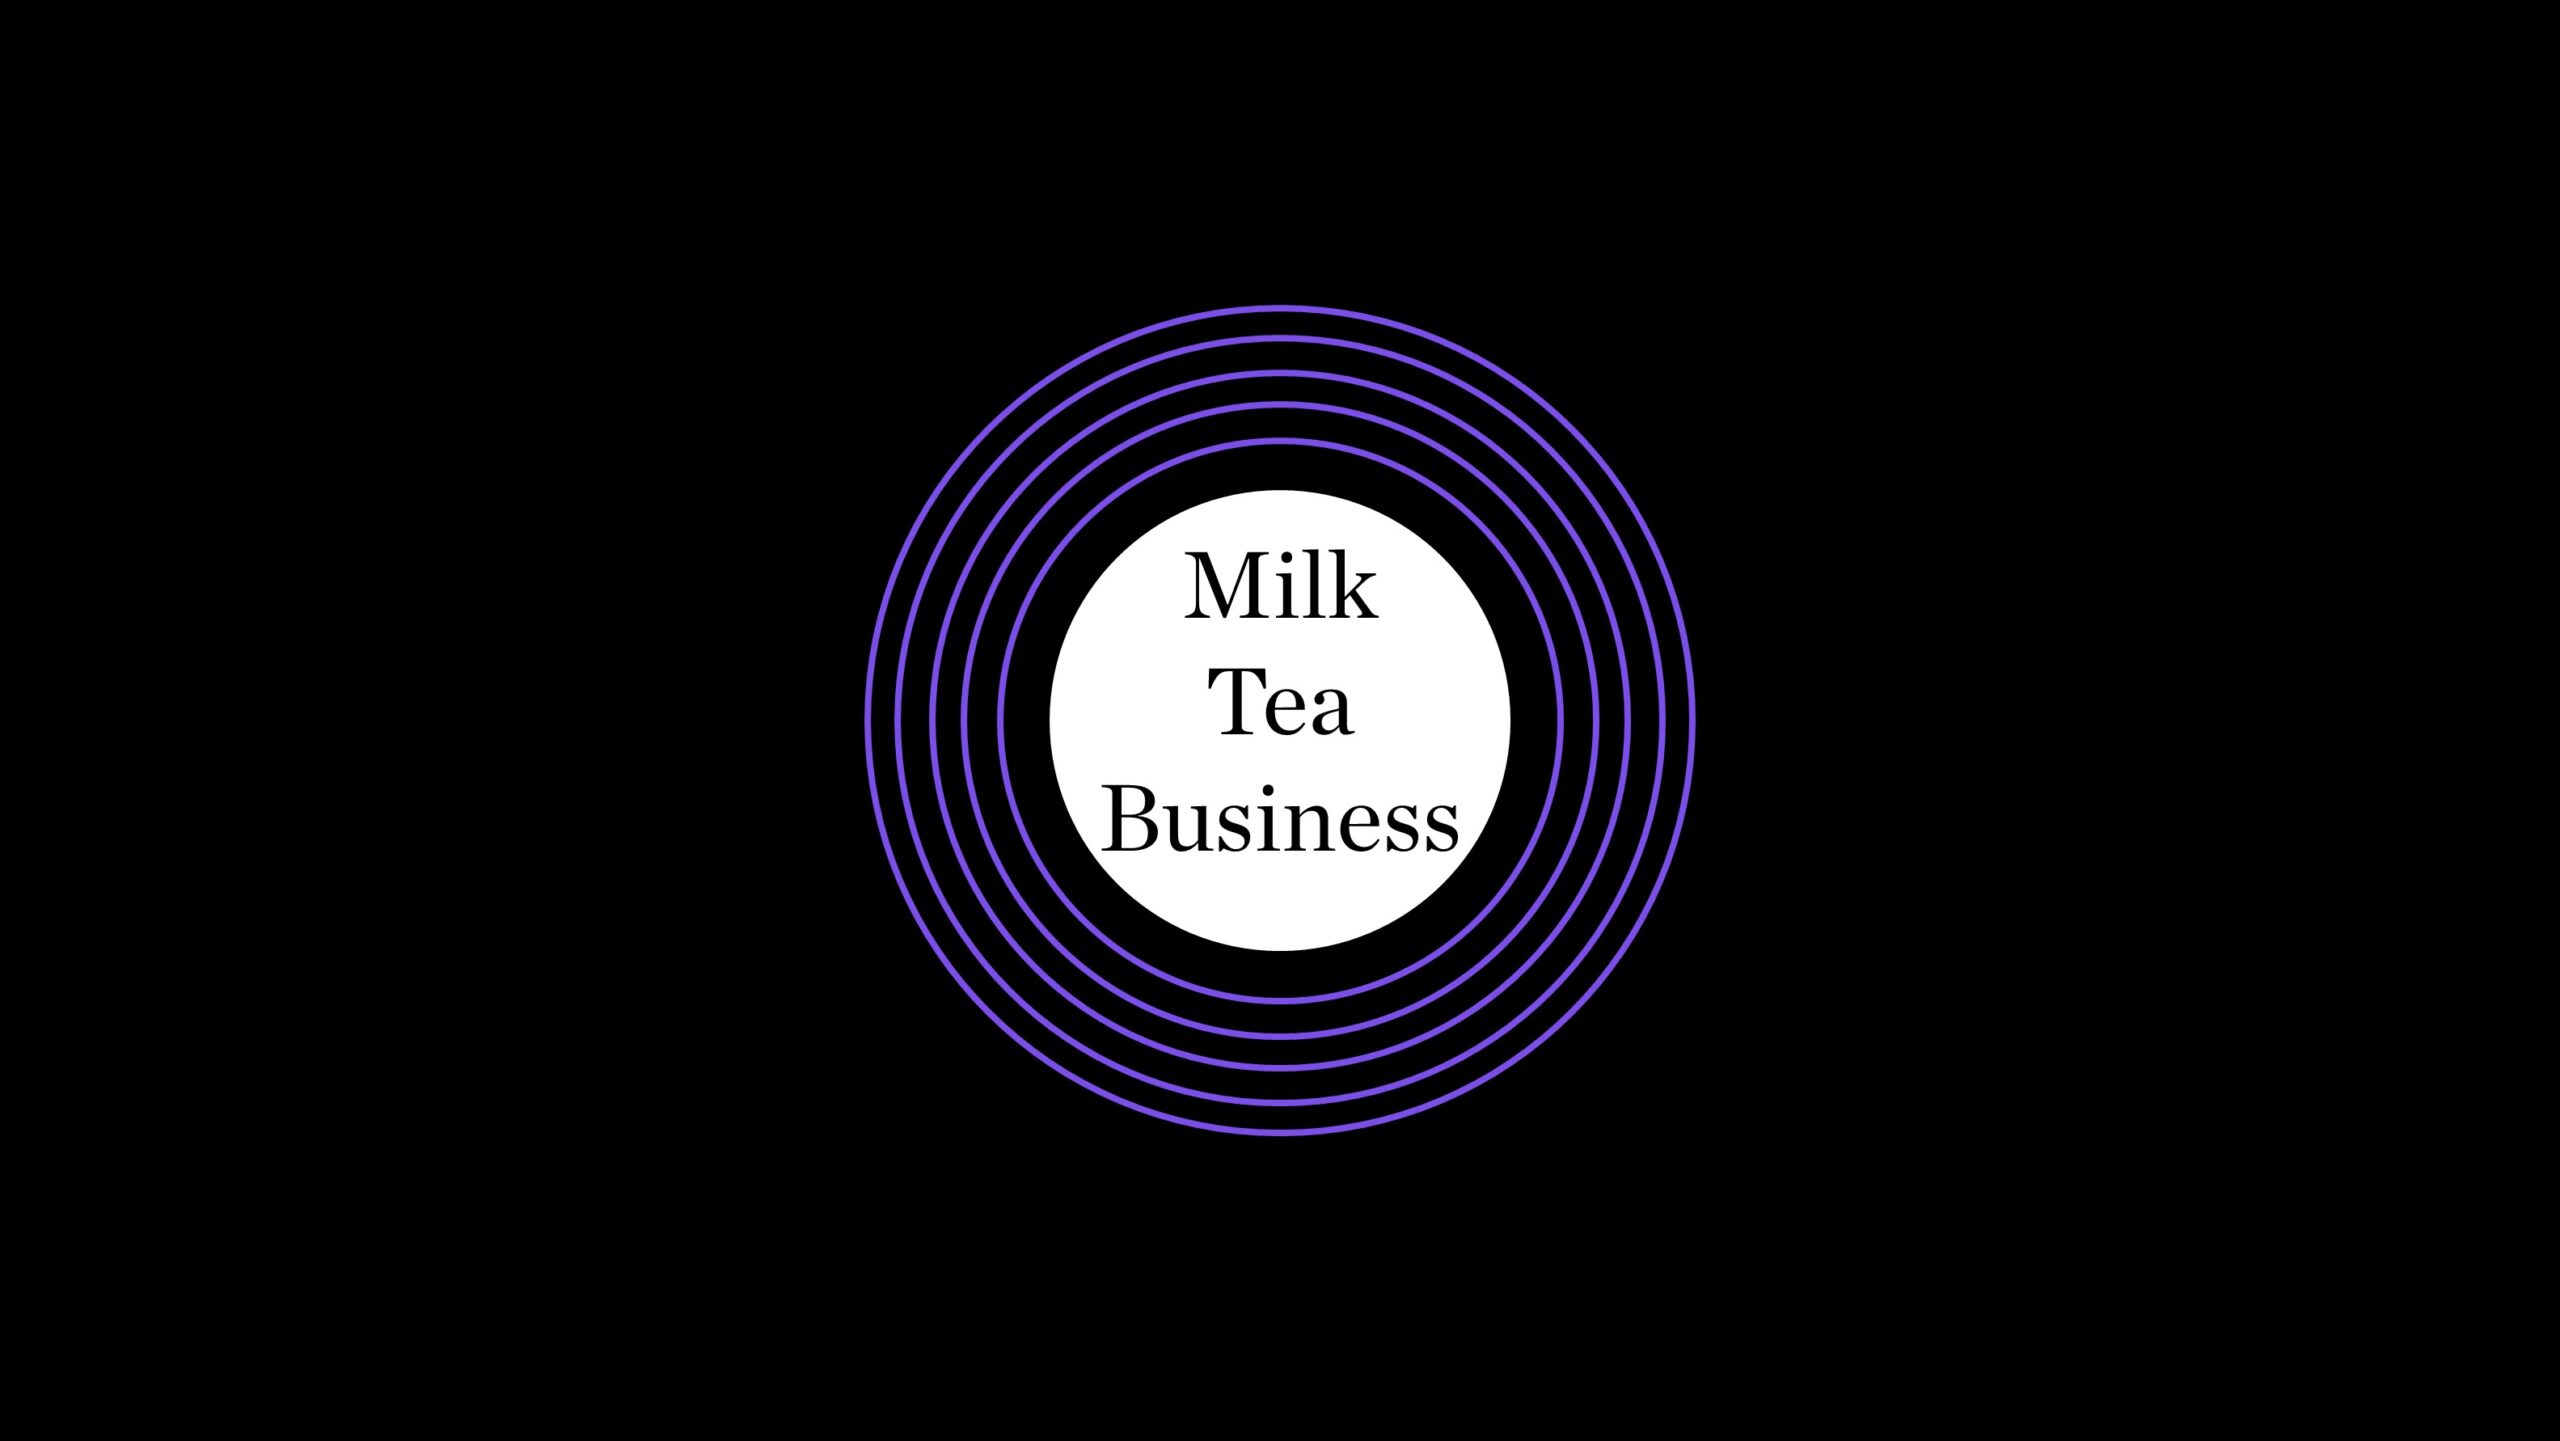 Marketing strategy for milk tea business